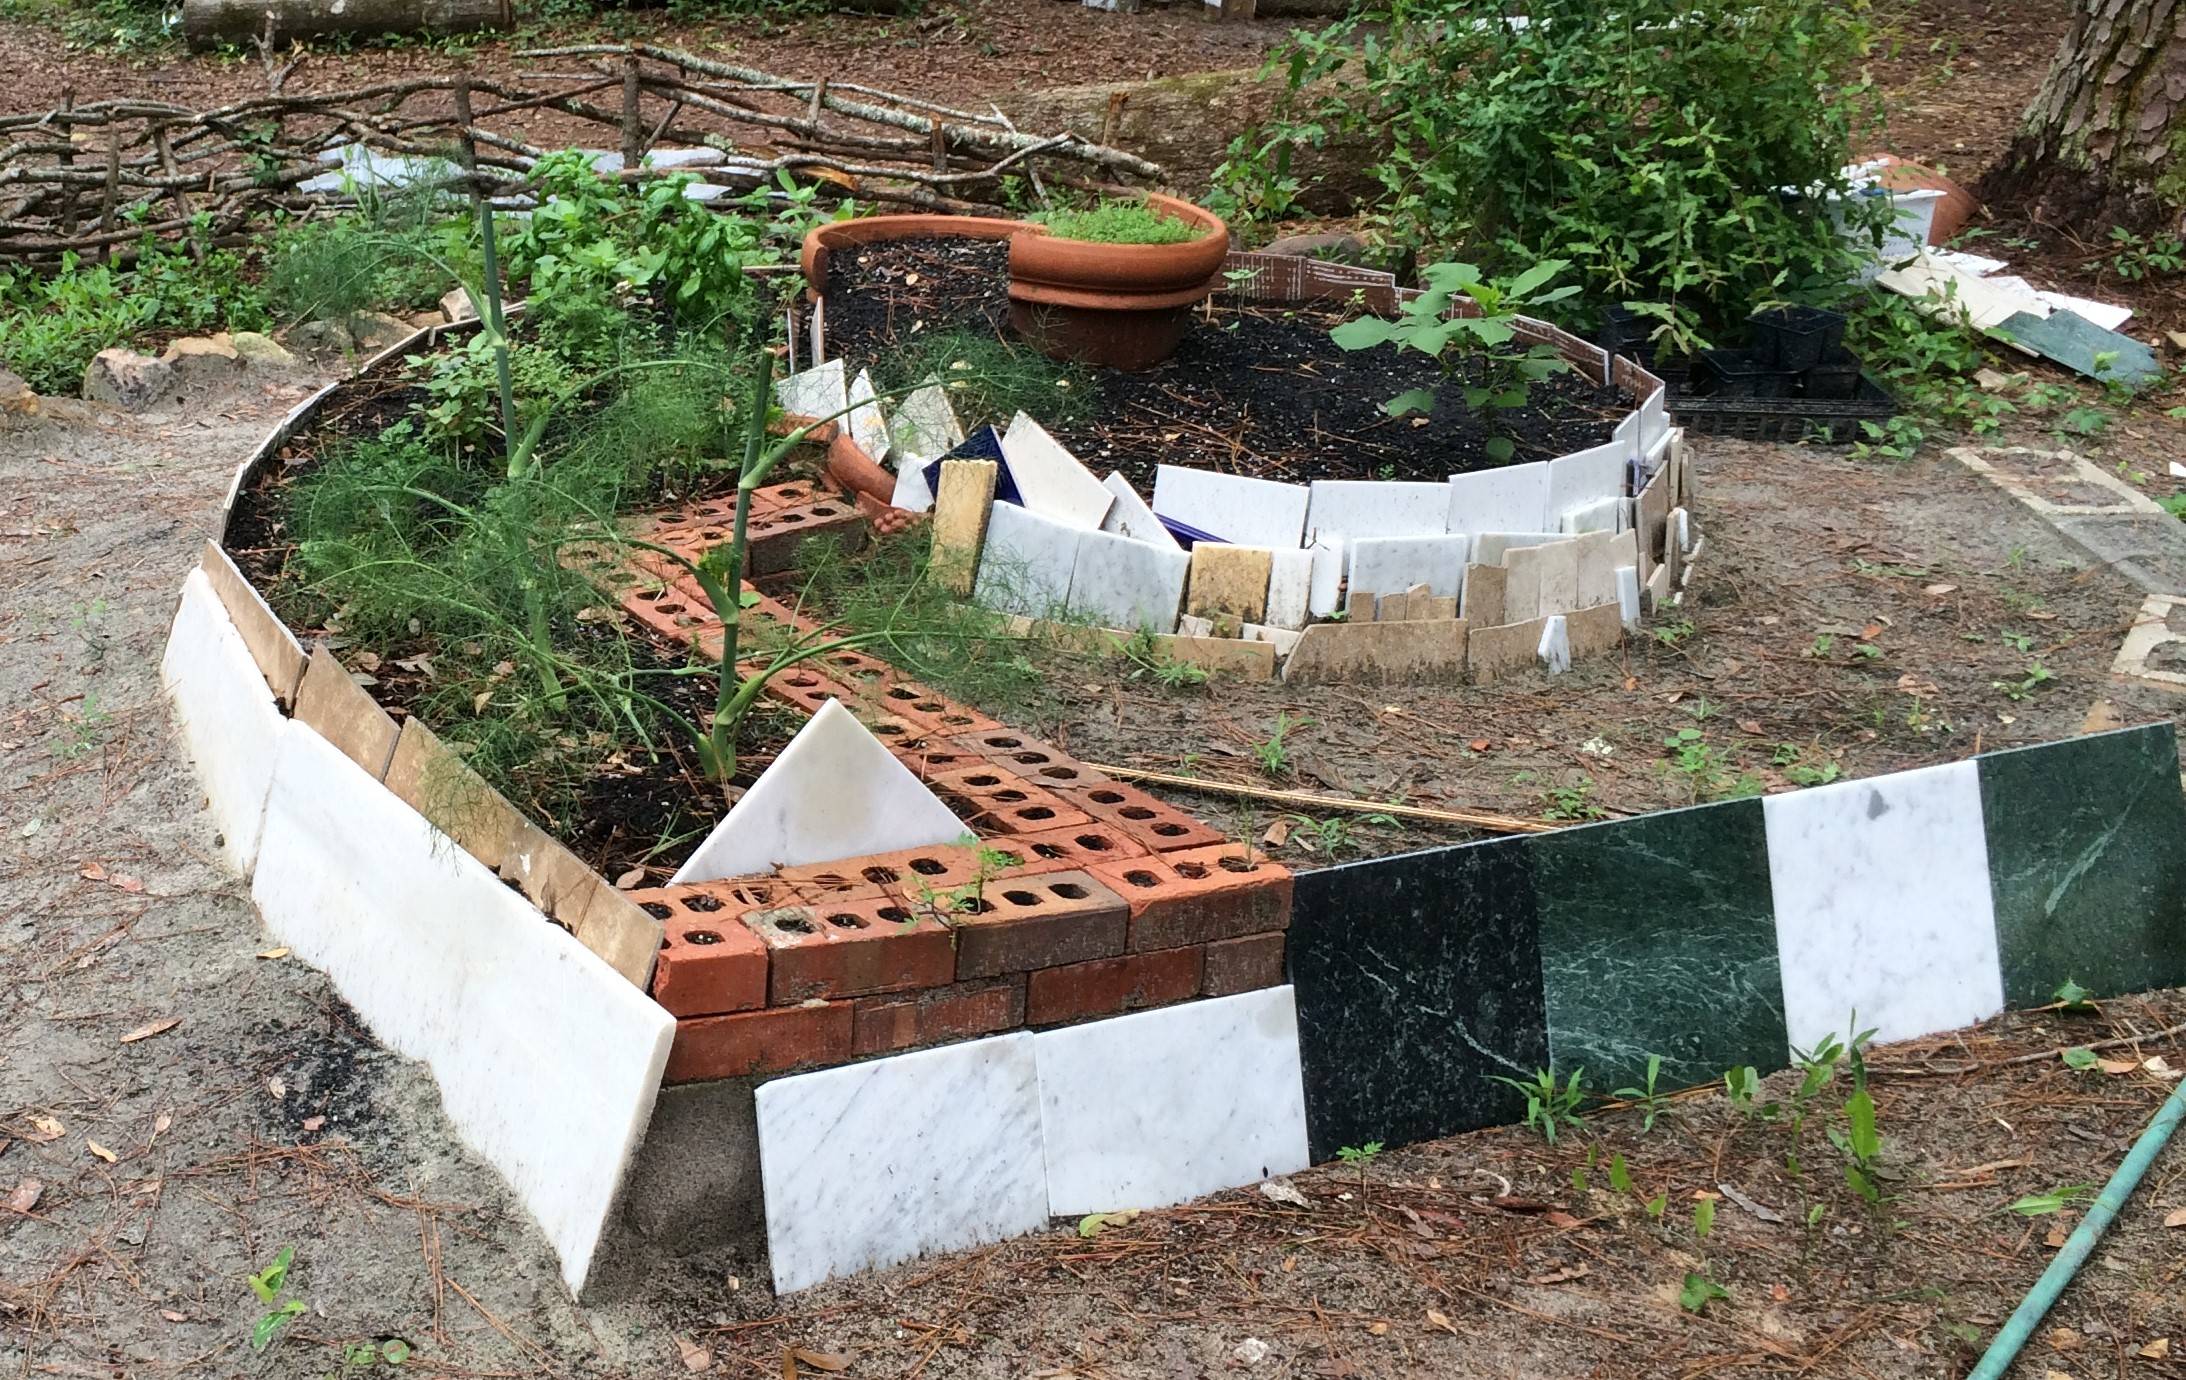 These Bricks Make Building Raised Garden Beds Simple